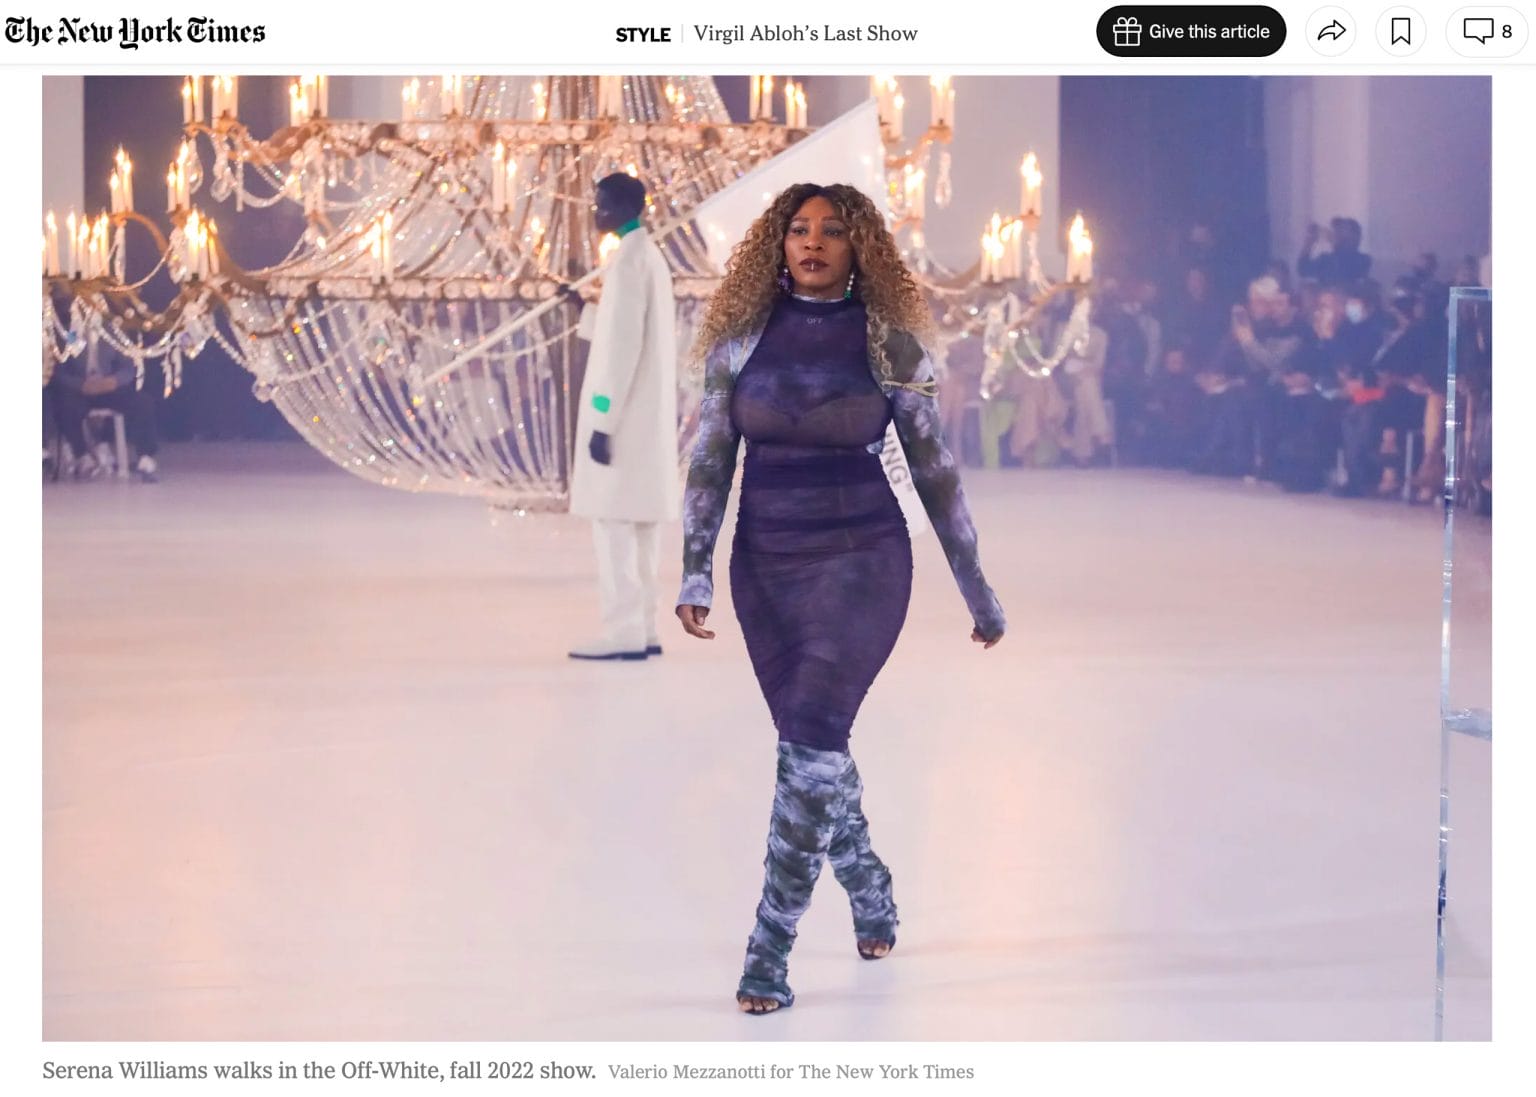 Serena Williams Walking The Off White Fashion Show, Photo By Valerio Mezzanotti For The New York Times